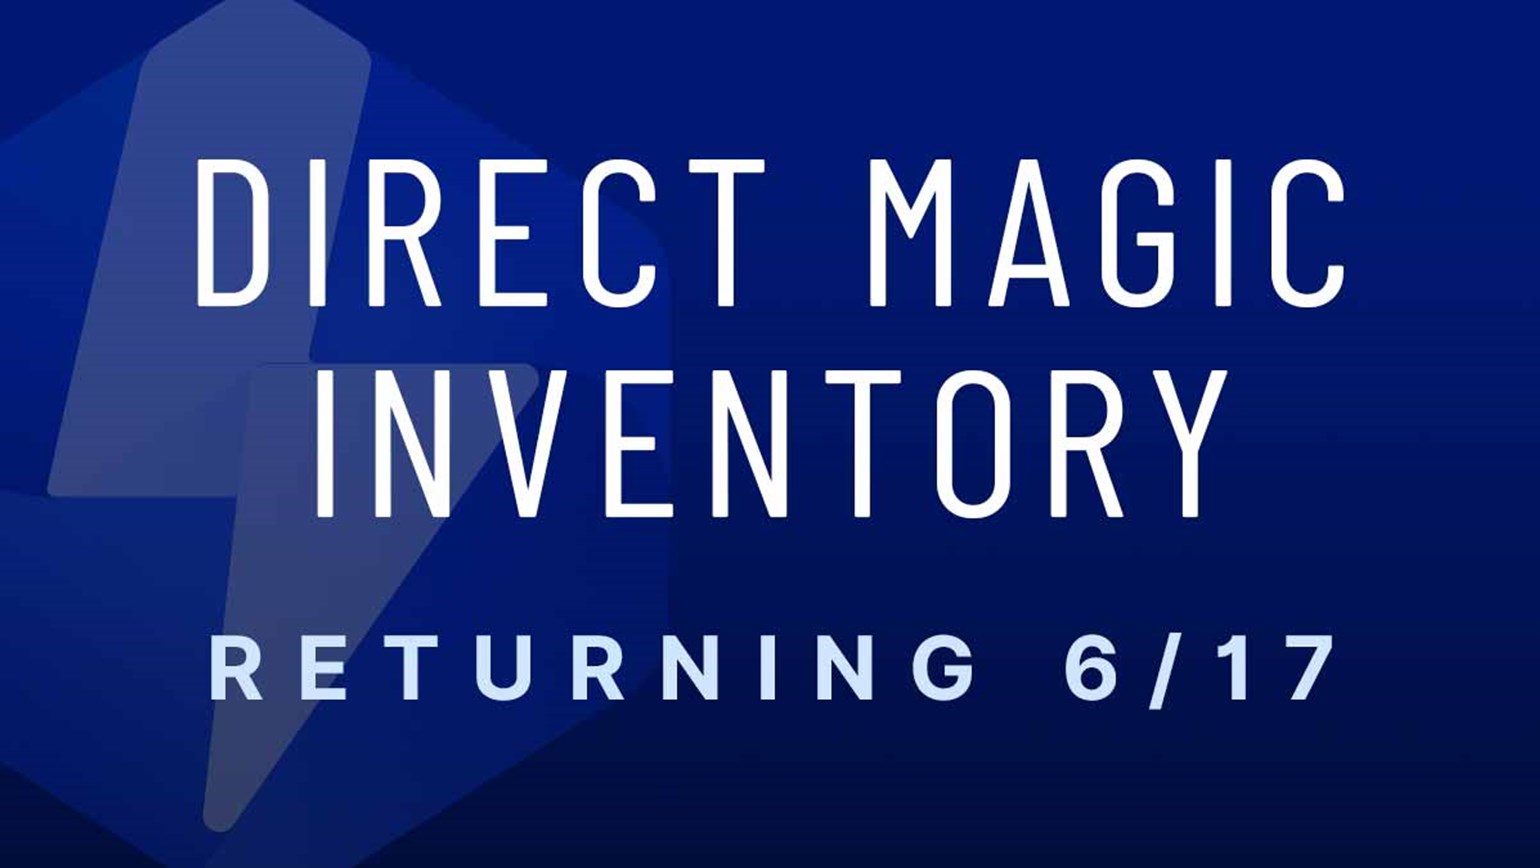 Direct Magic Inventory Returning 6/17